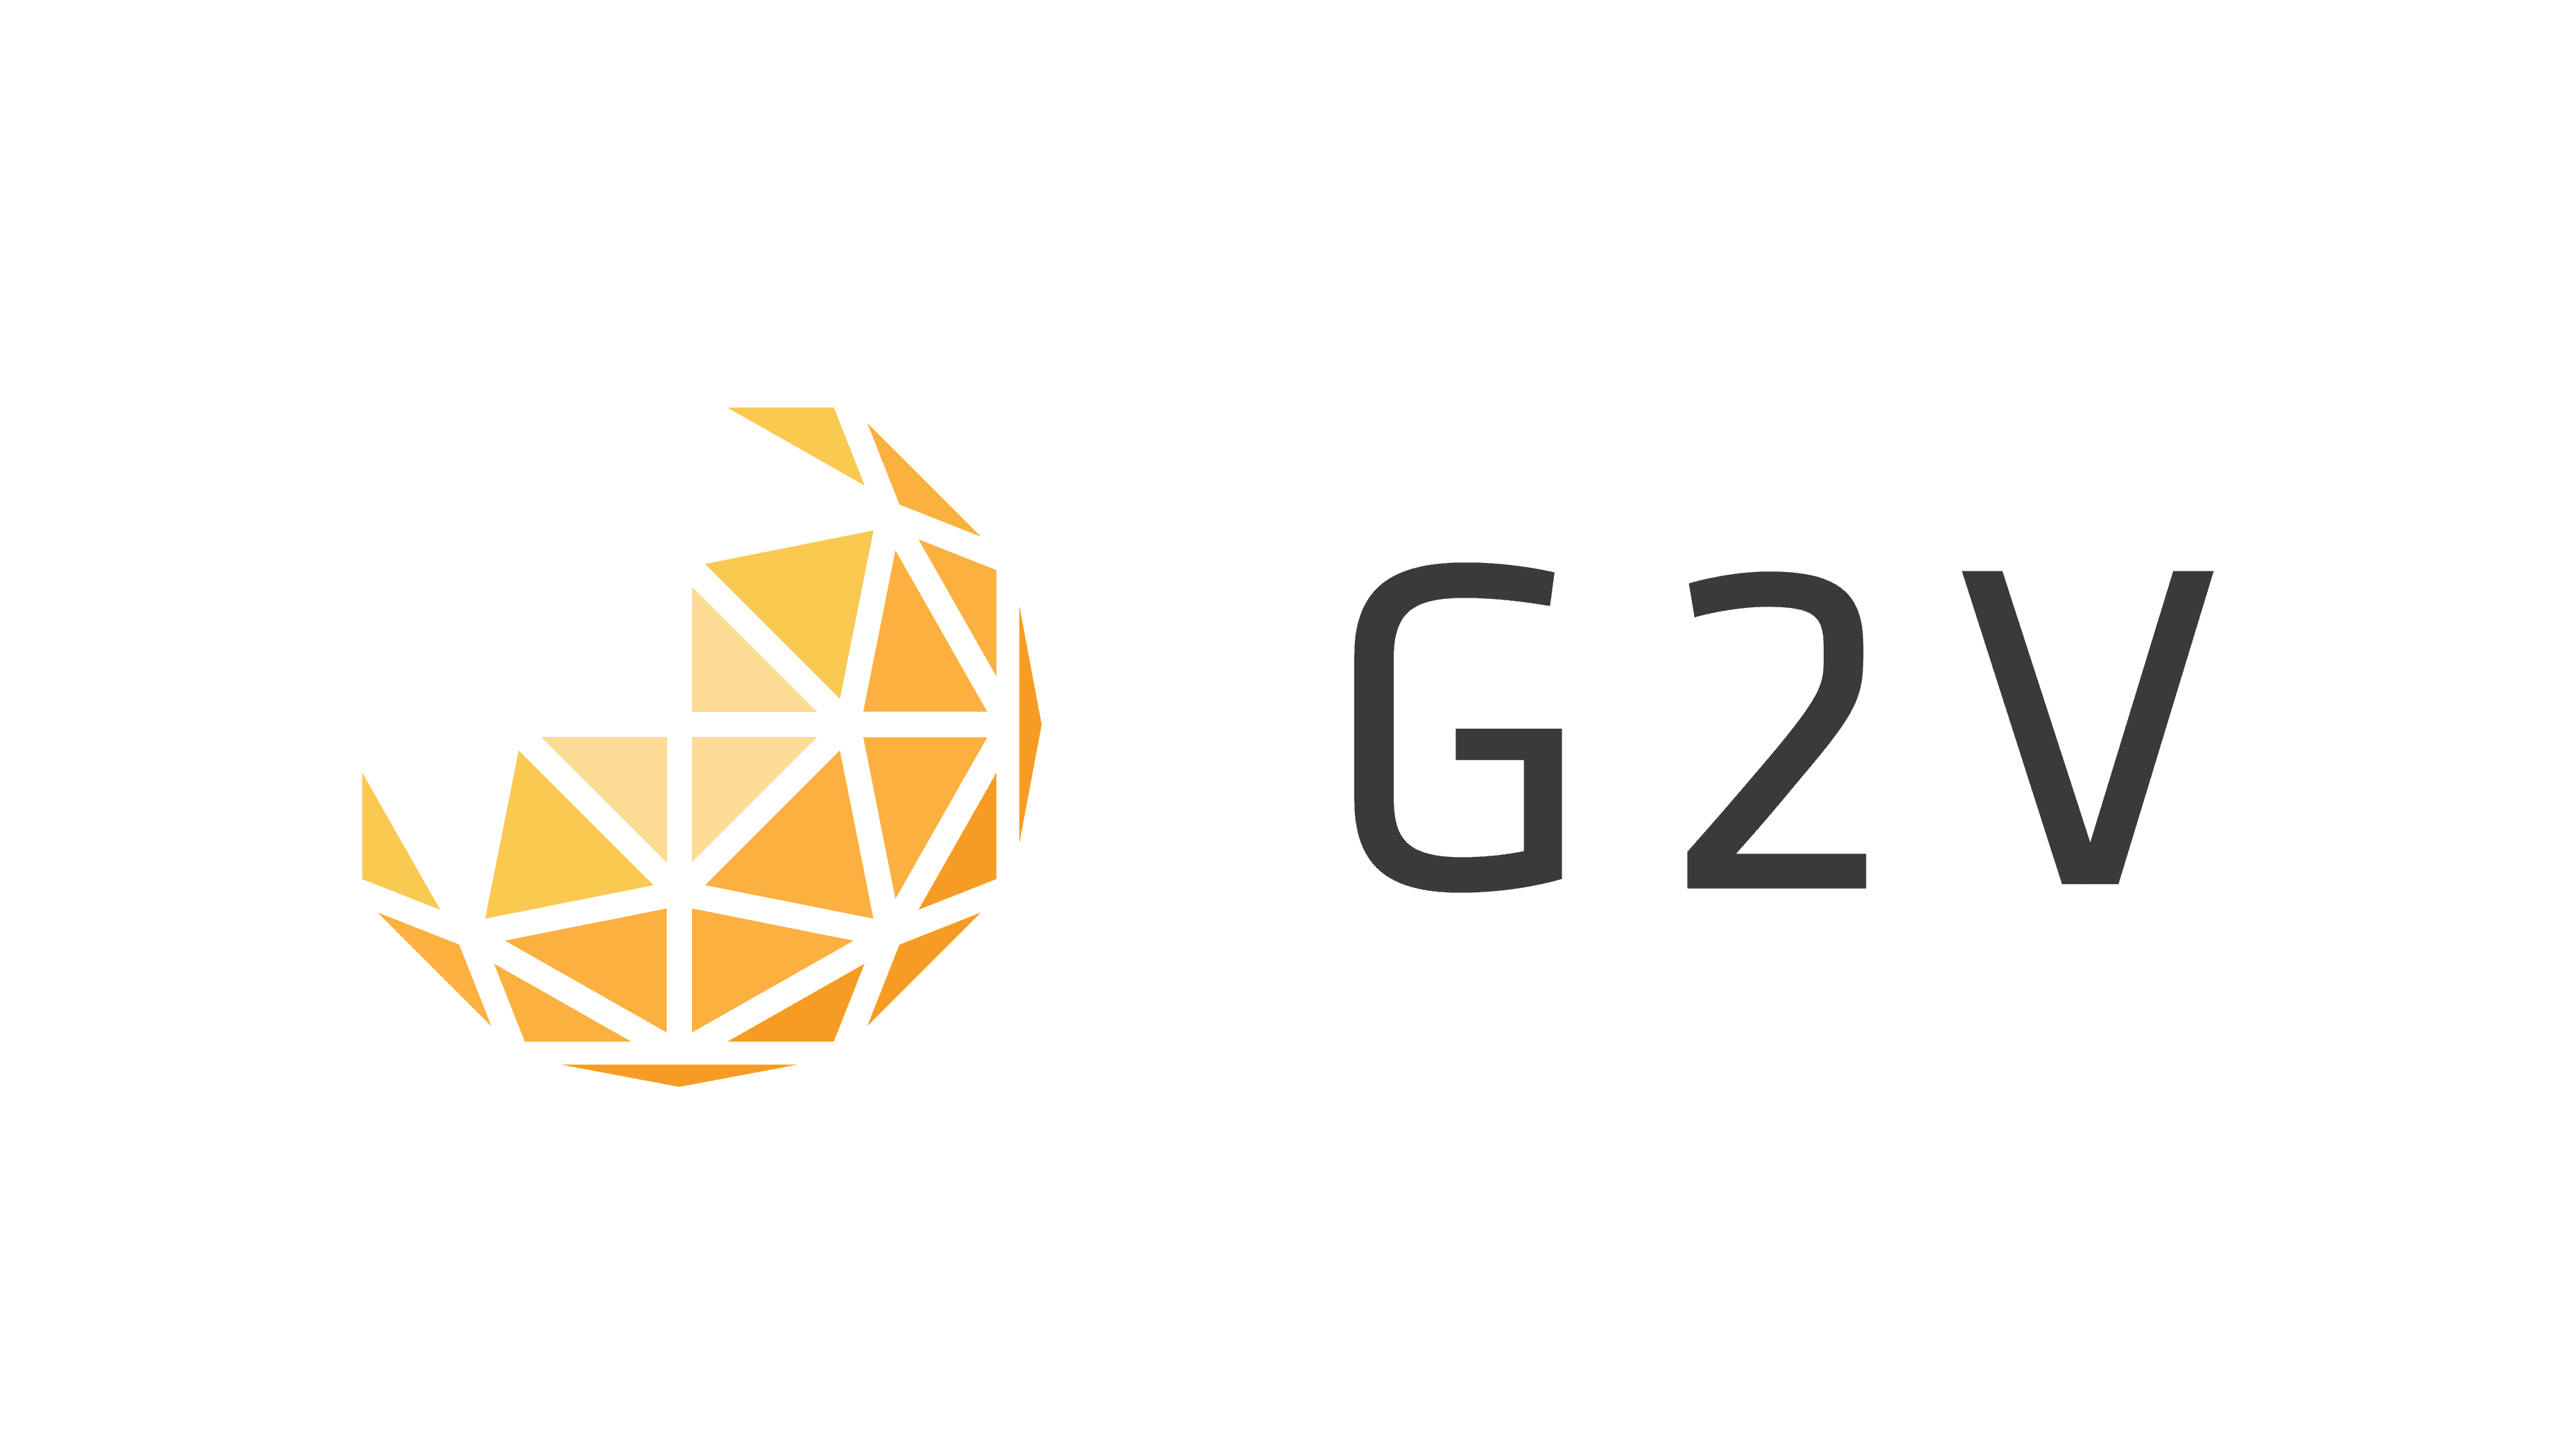 g2v-sunlight-simulator-logo-company